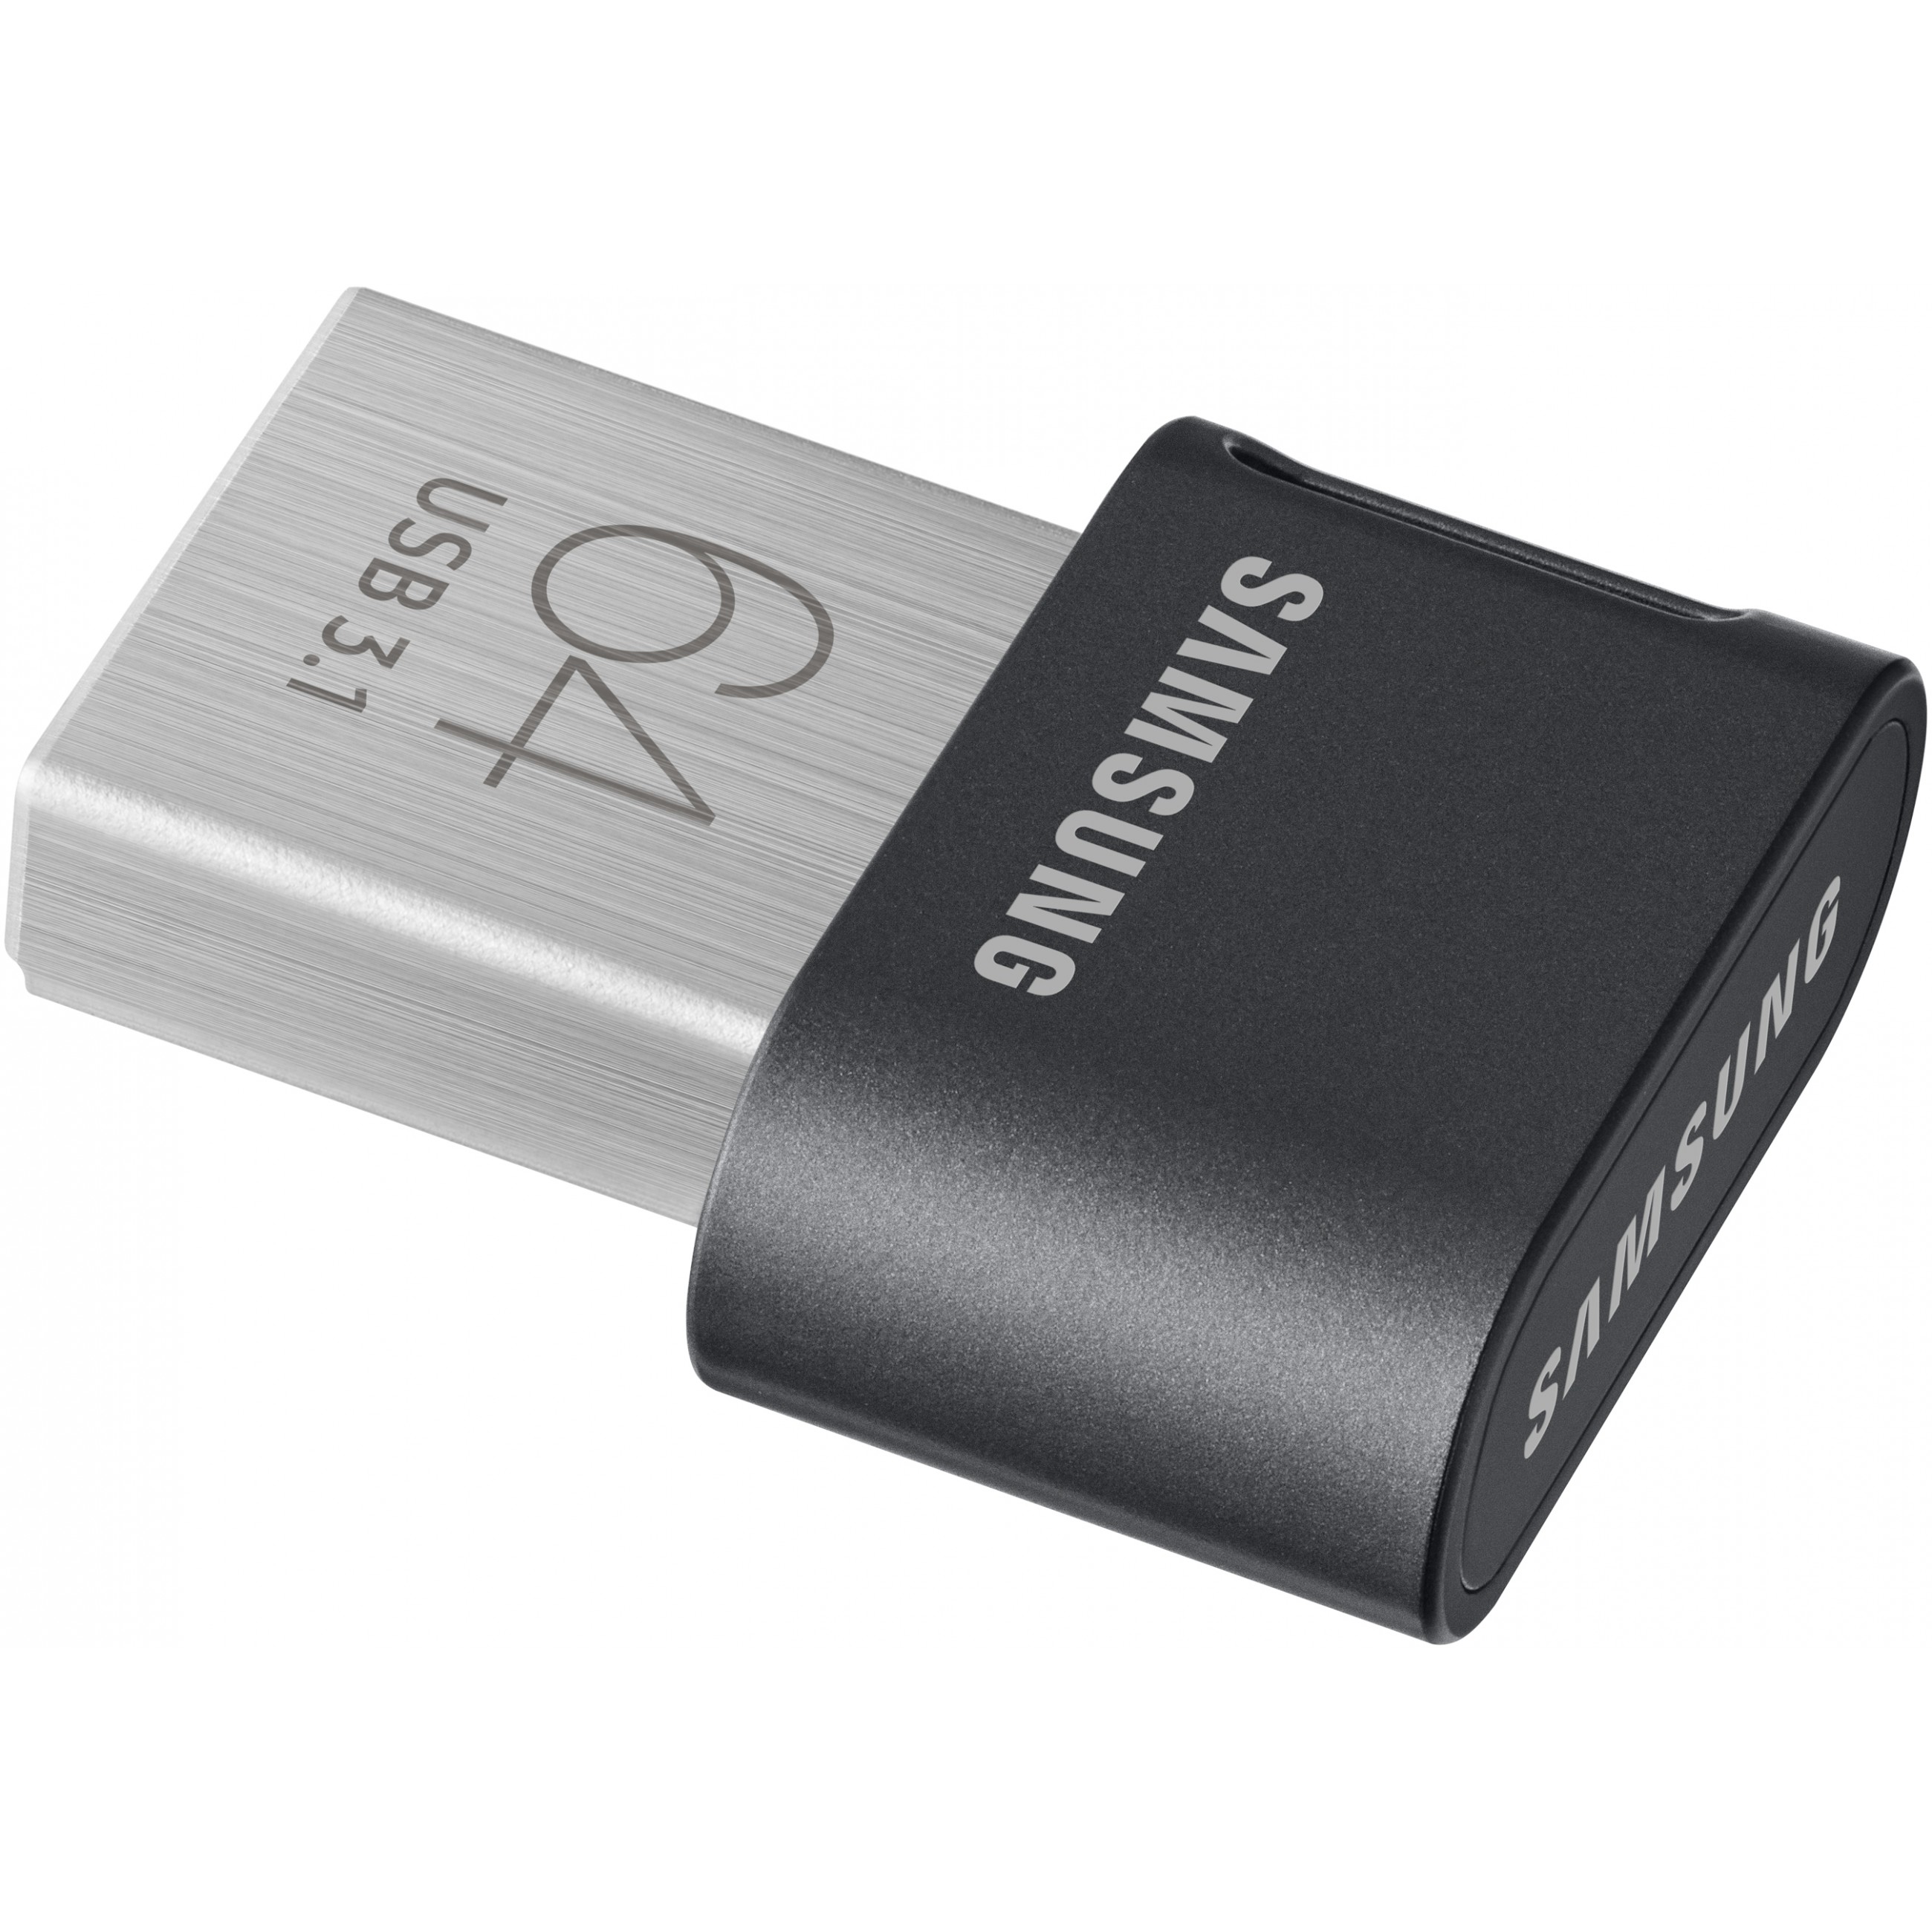 SAMSUNG MUF-64AB/APC, USB-Stick, Samsung MUF-64AB USB  (BILD6)